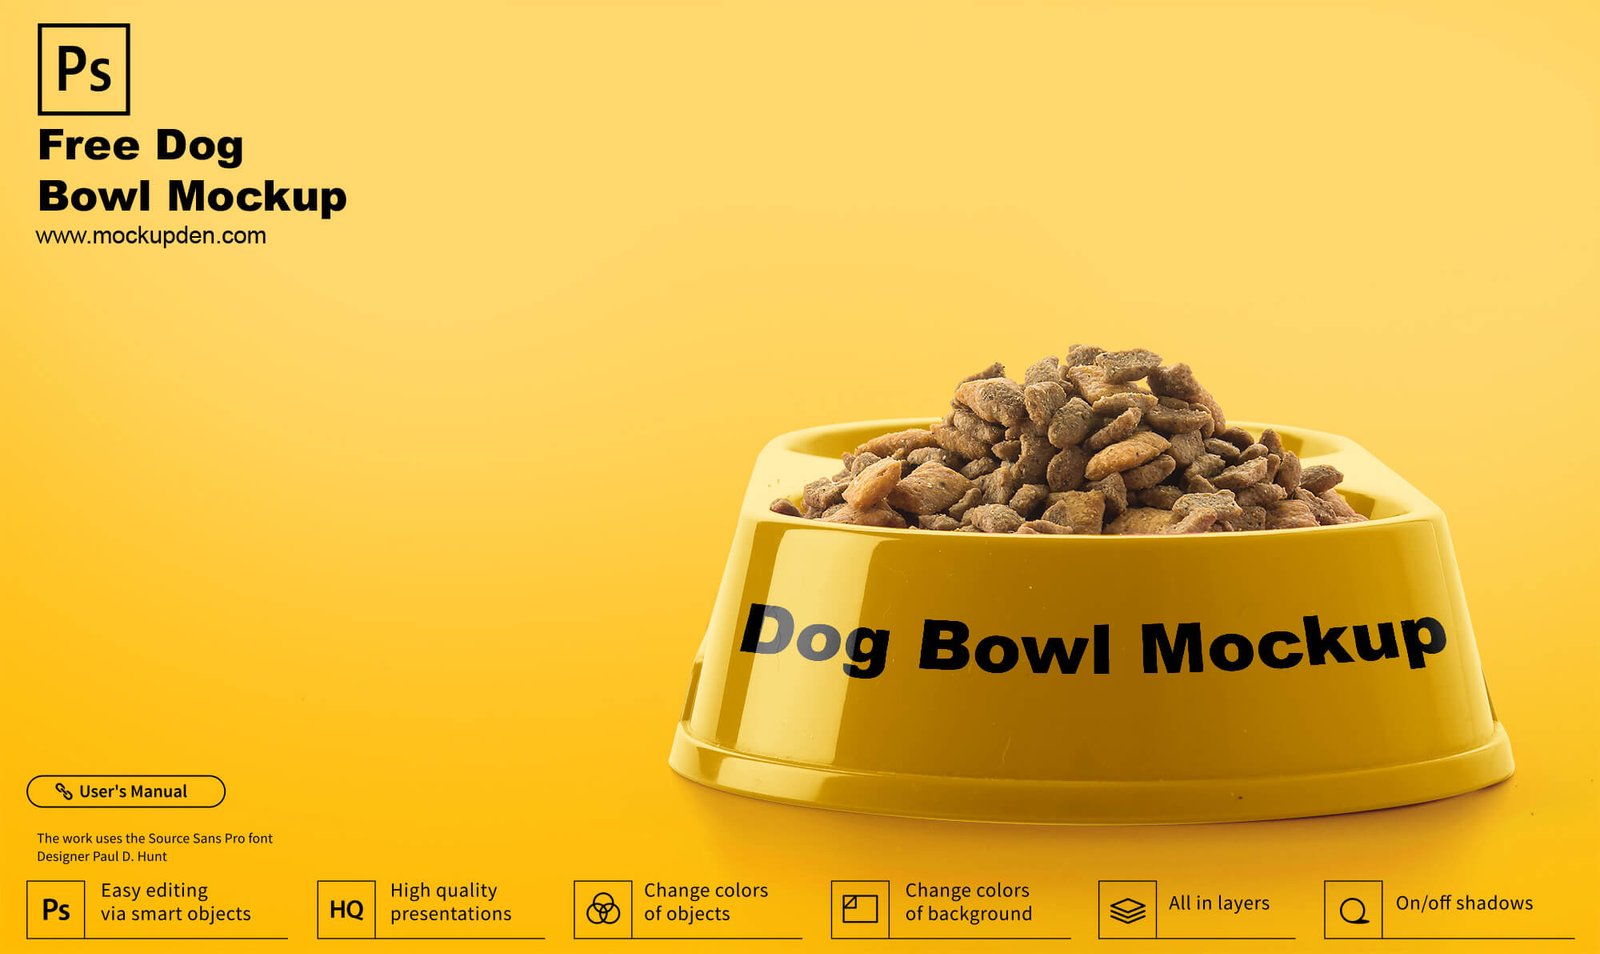 Free Dog Bowl Mockup PSD Template - Mockup Den